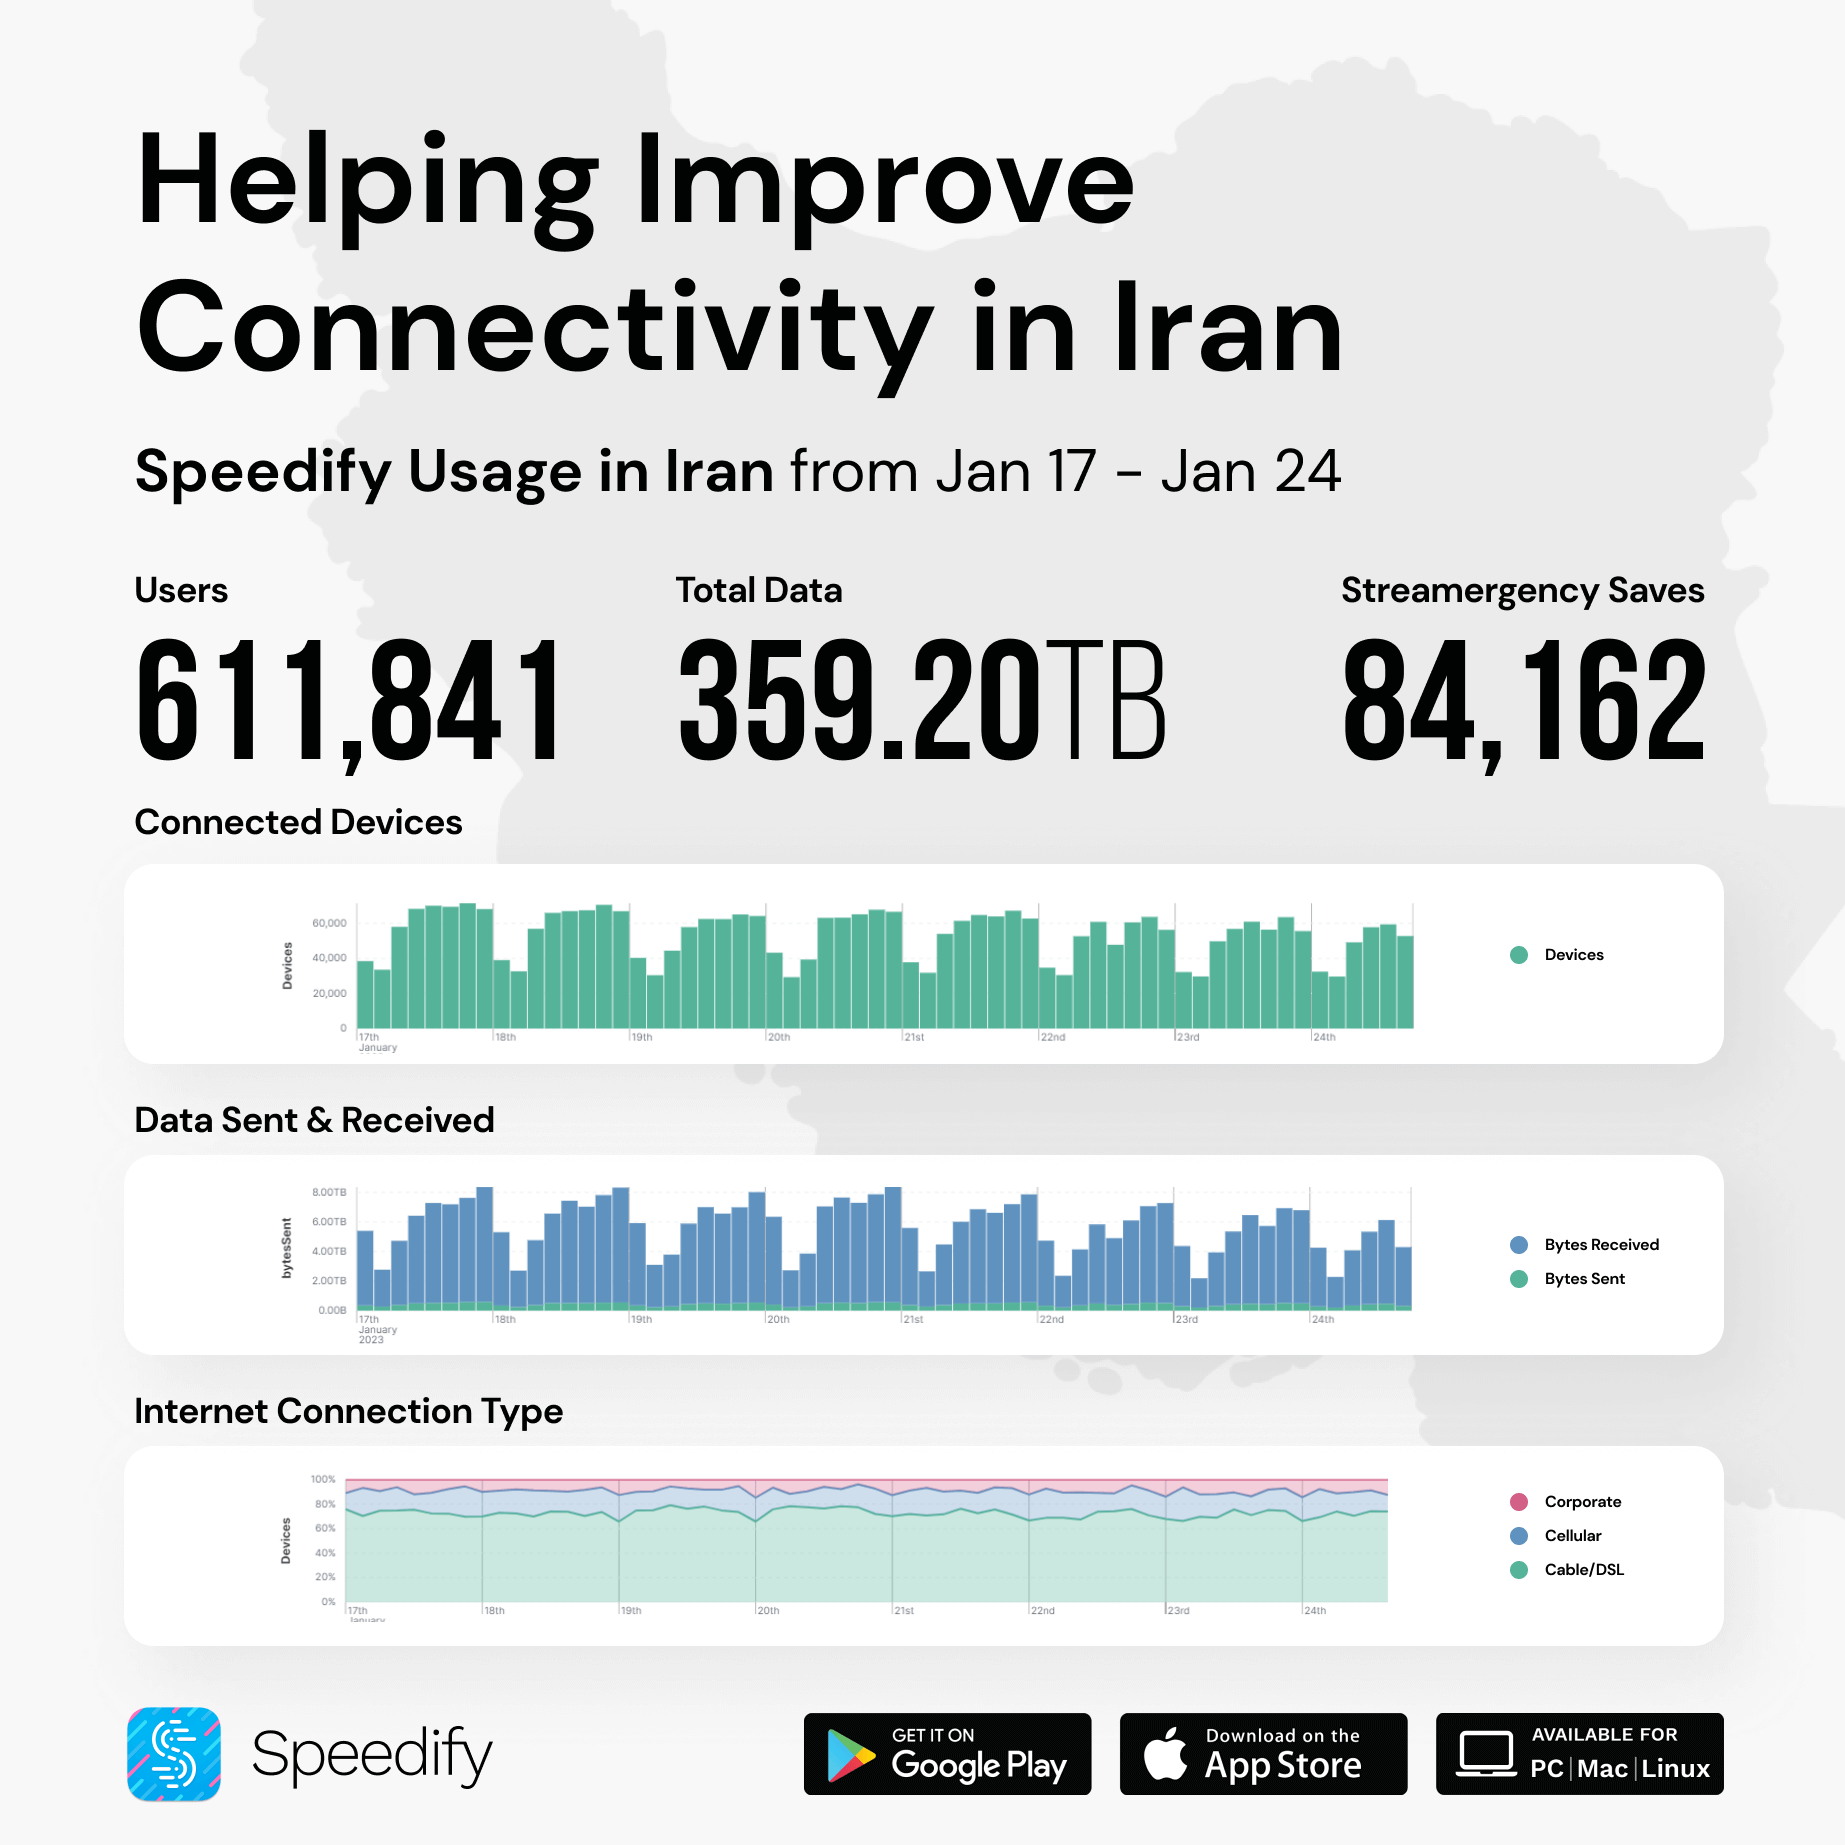 Jan 24 - Iran Internet usage for Speedify users